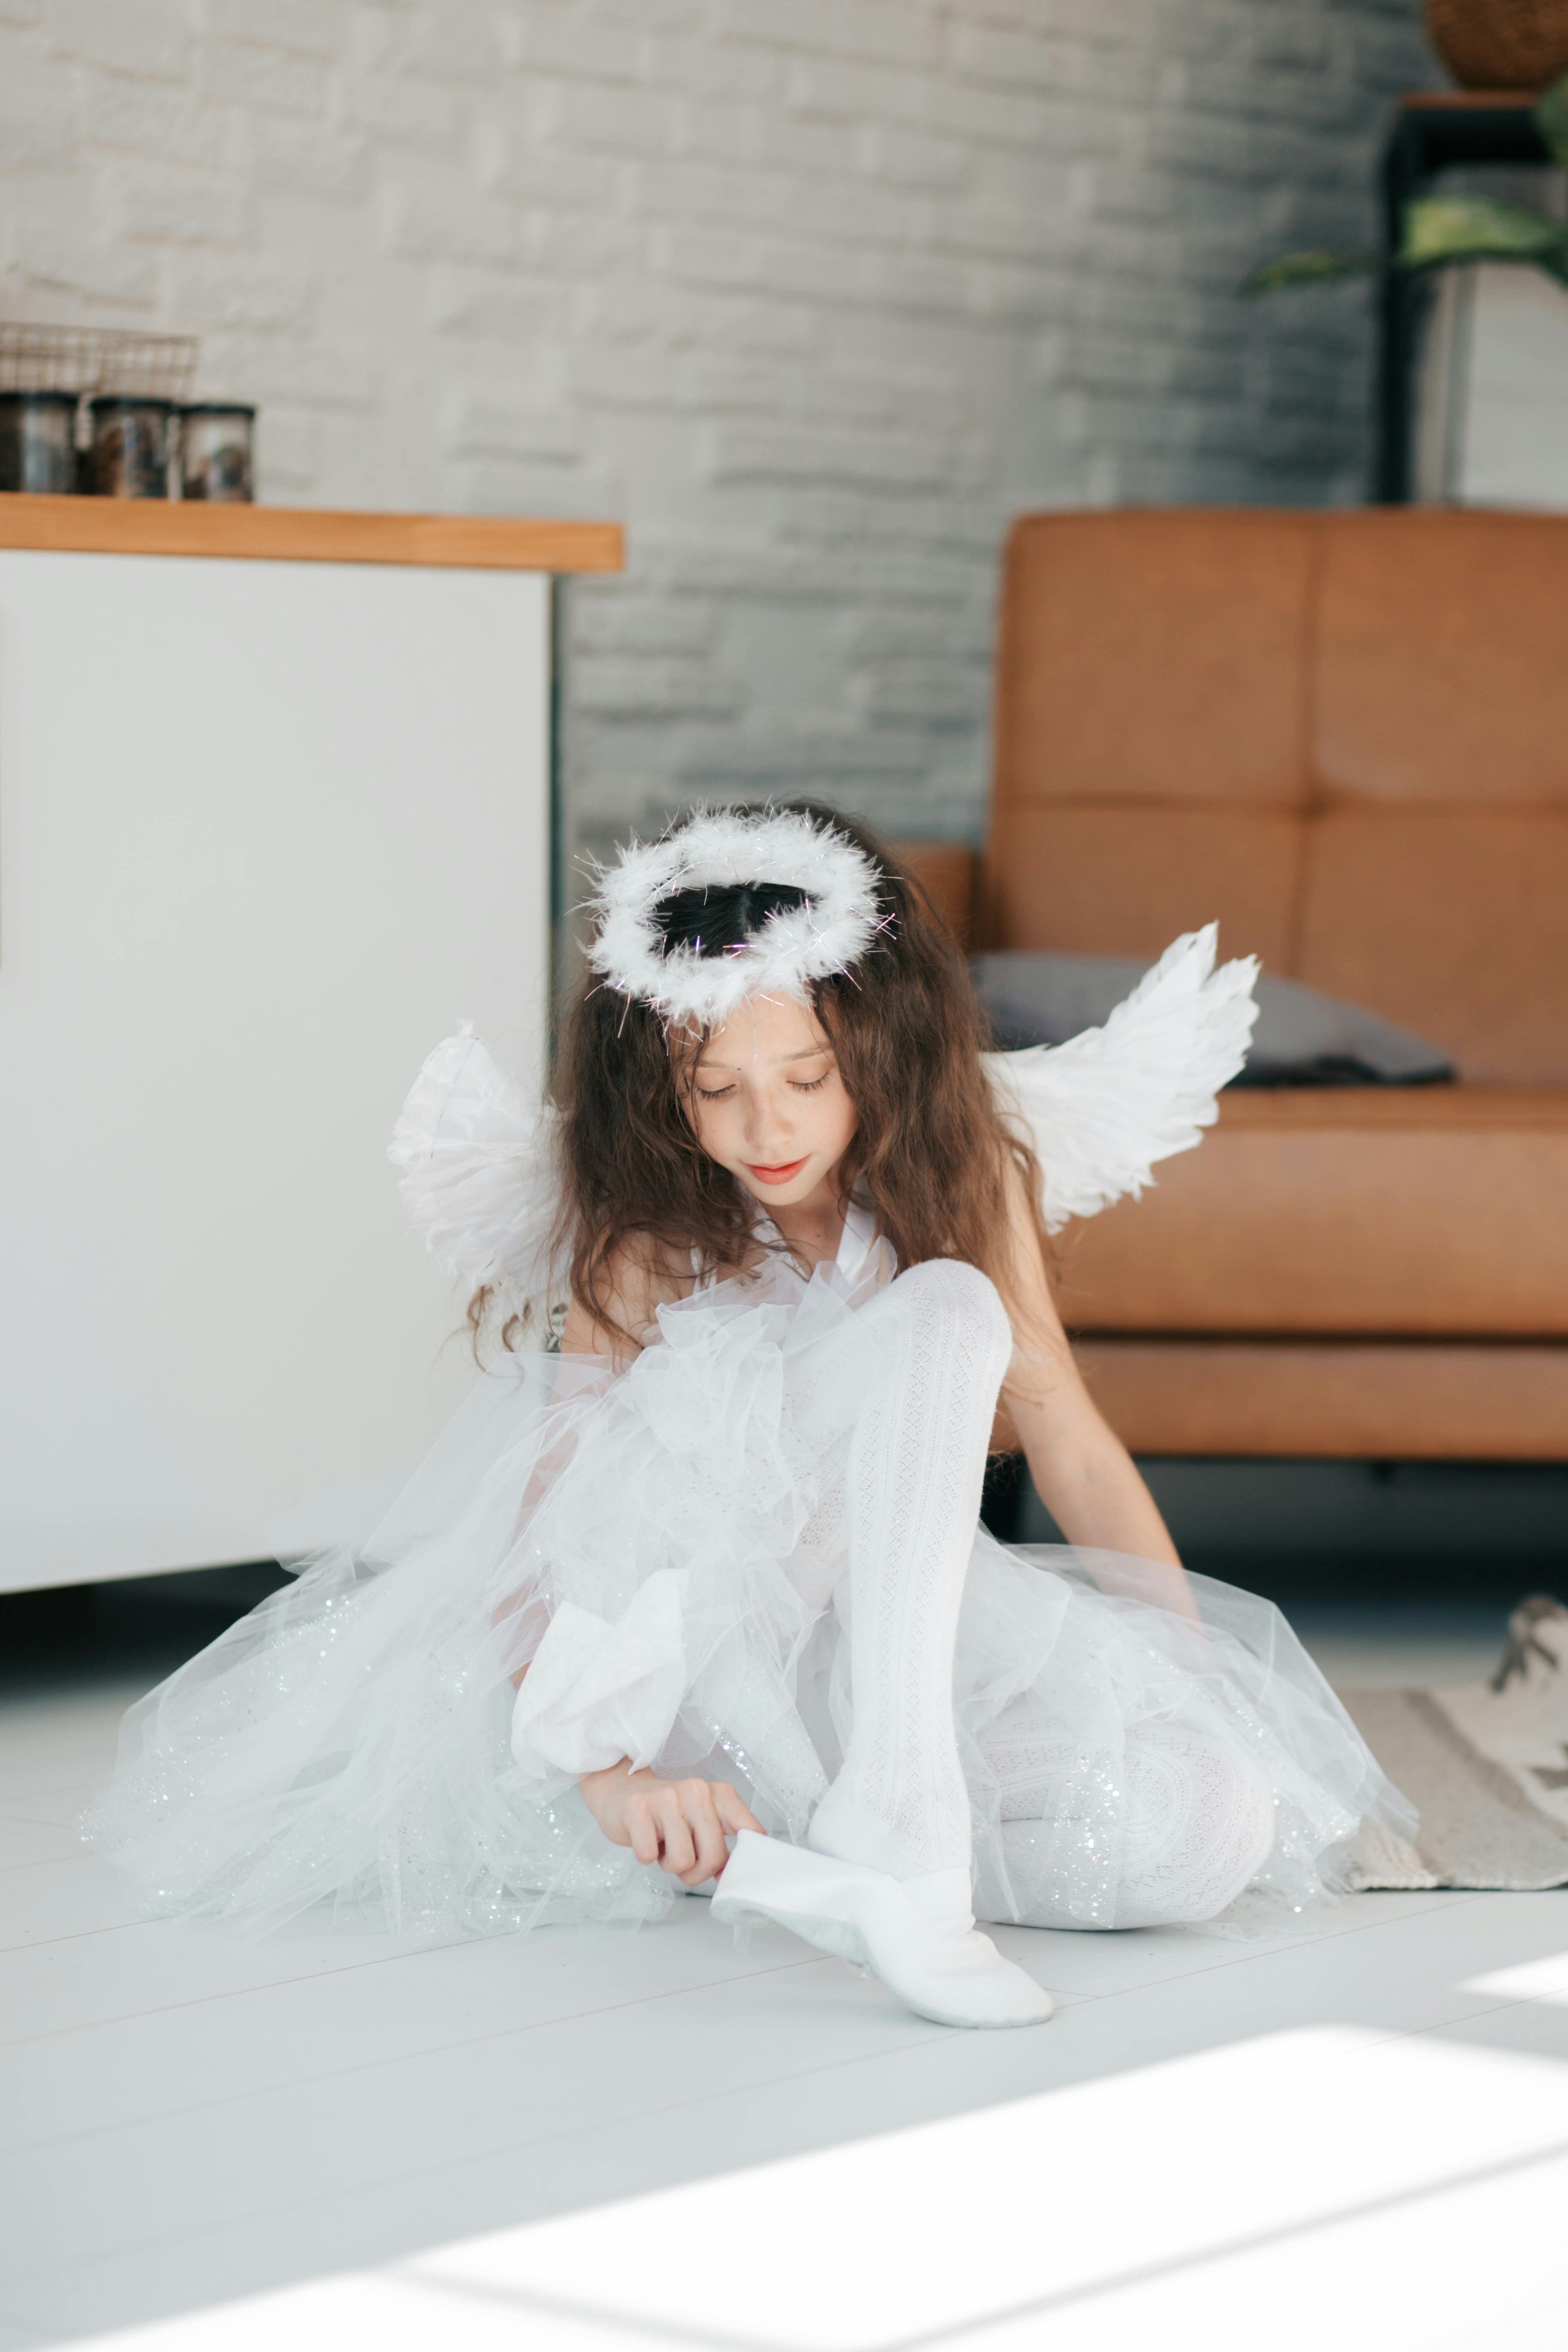 Cute Girl in Angel Costume Wearing Her White Shoe · Free Stock Photo